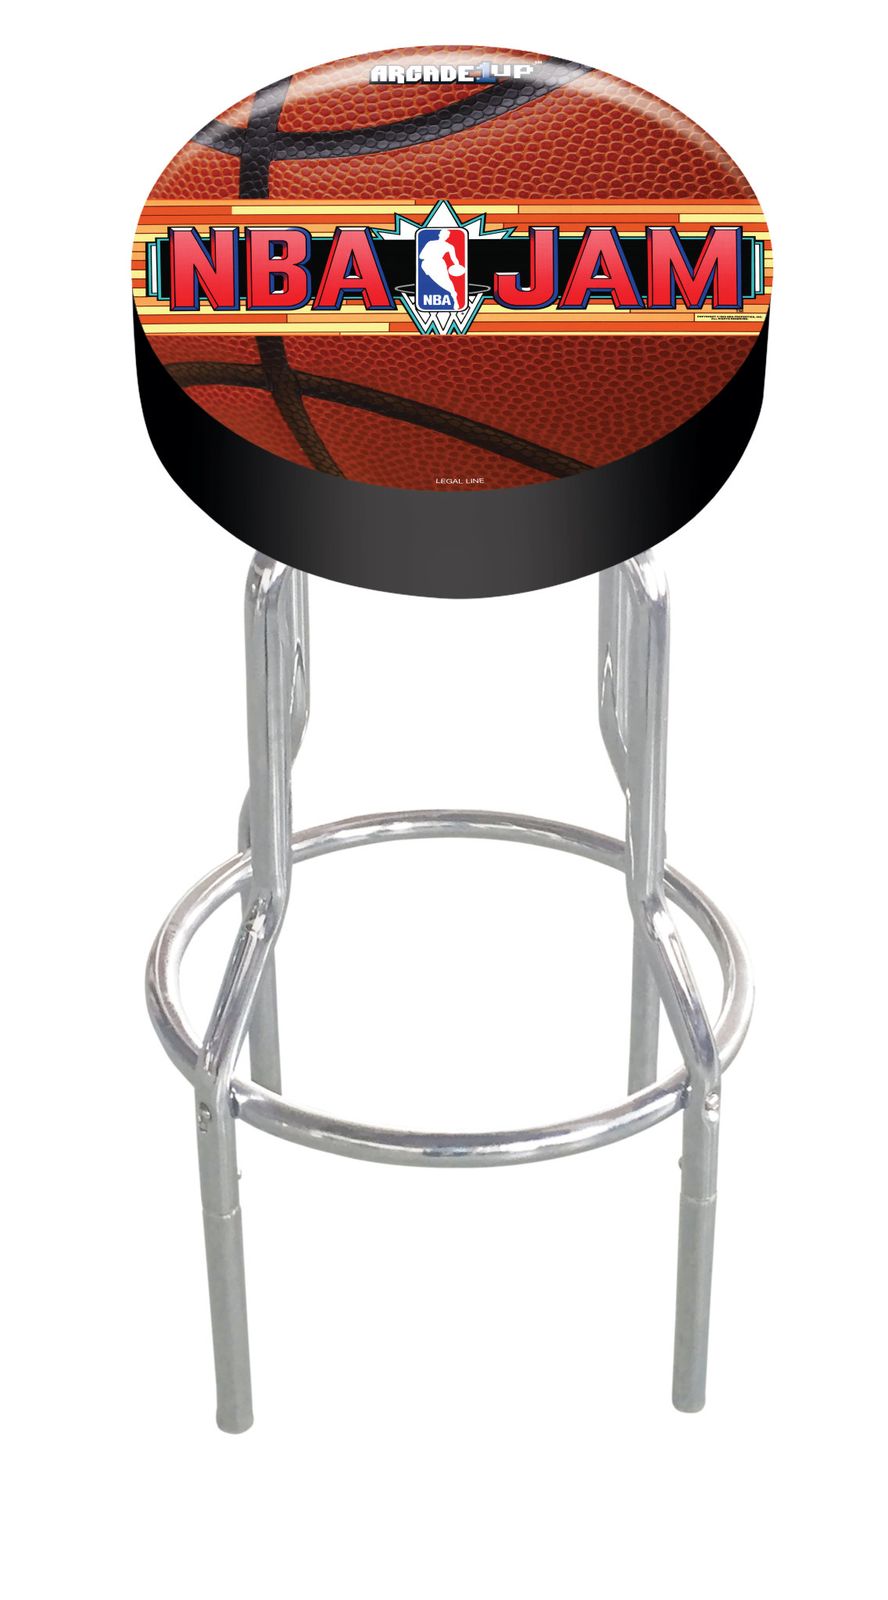 NBA Jam Adjustable Stool, Arcade1Up - image 1 of 2